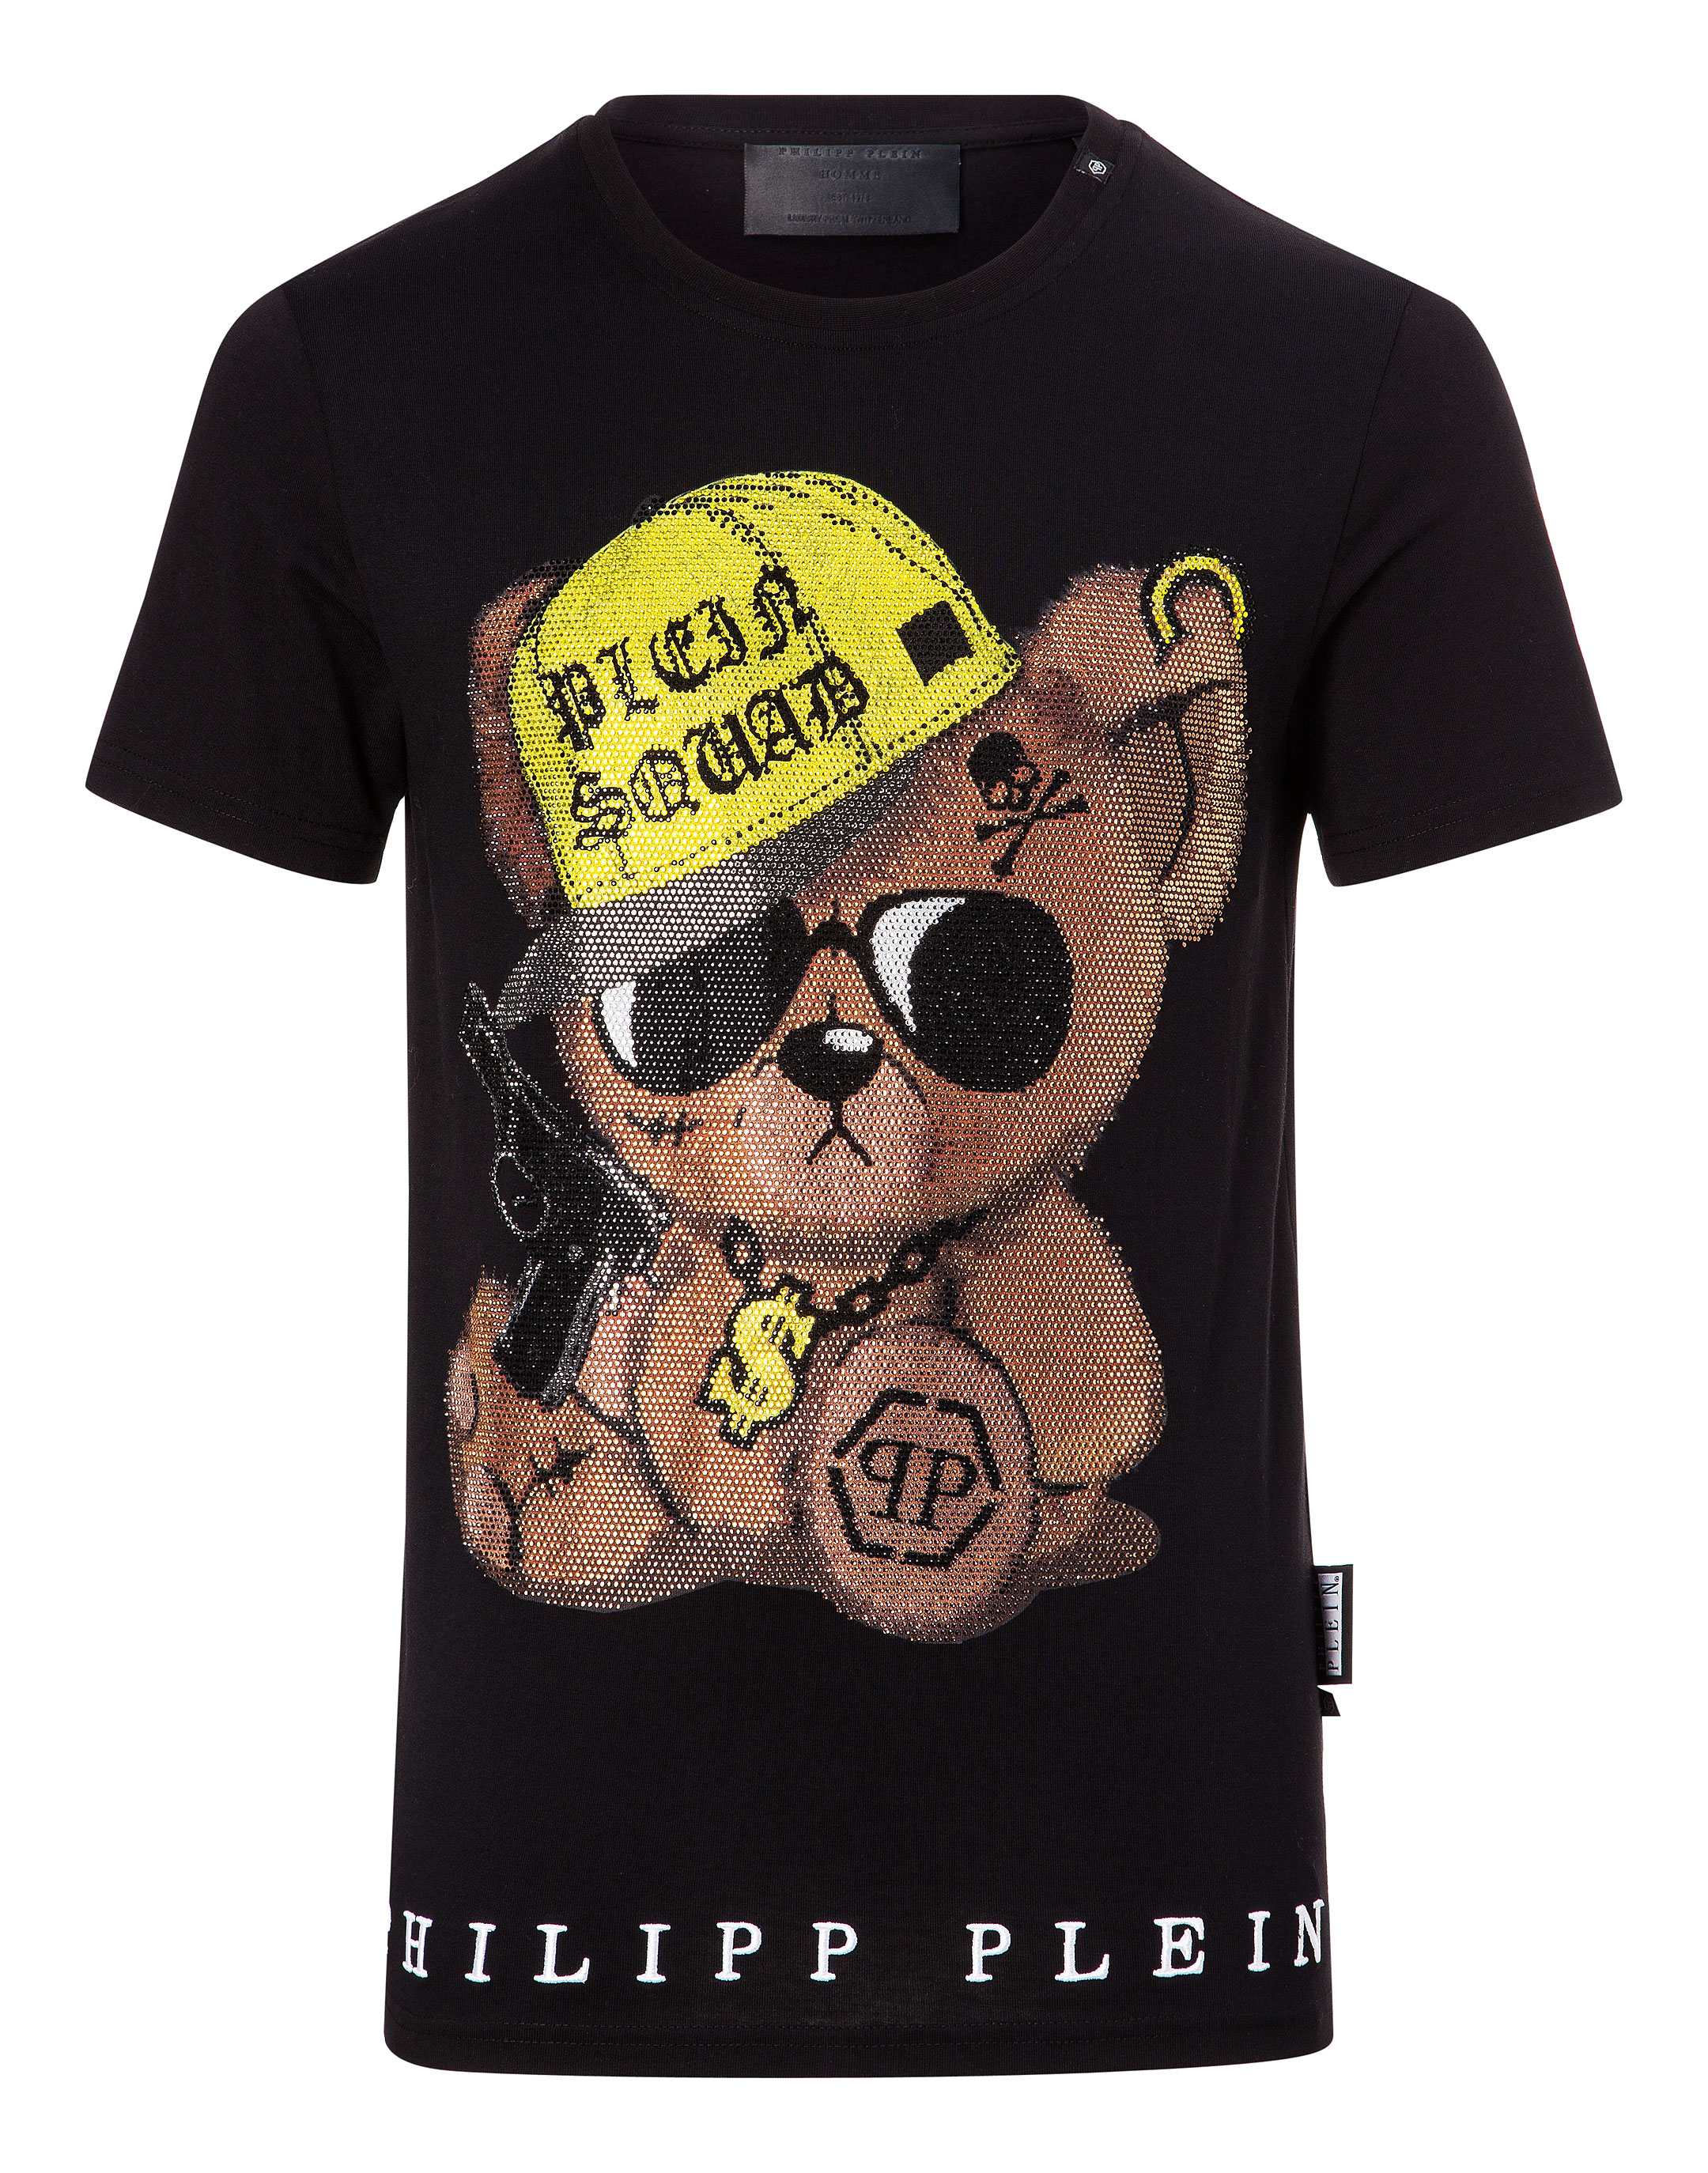 philipp plein teddy bear shirt